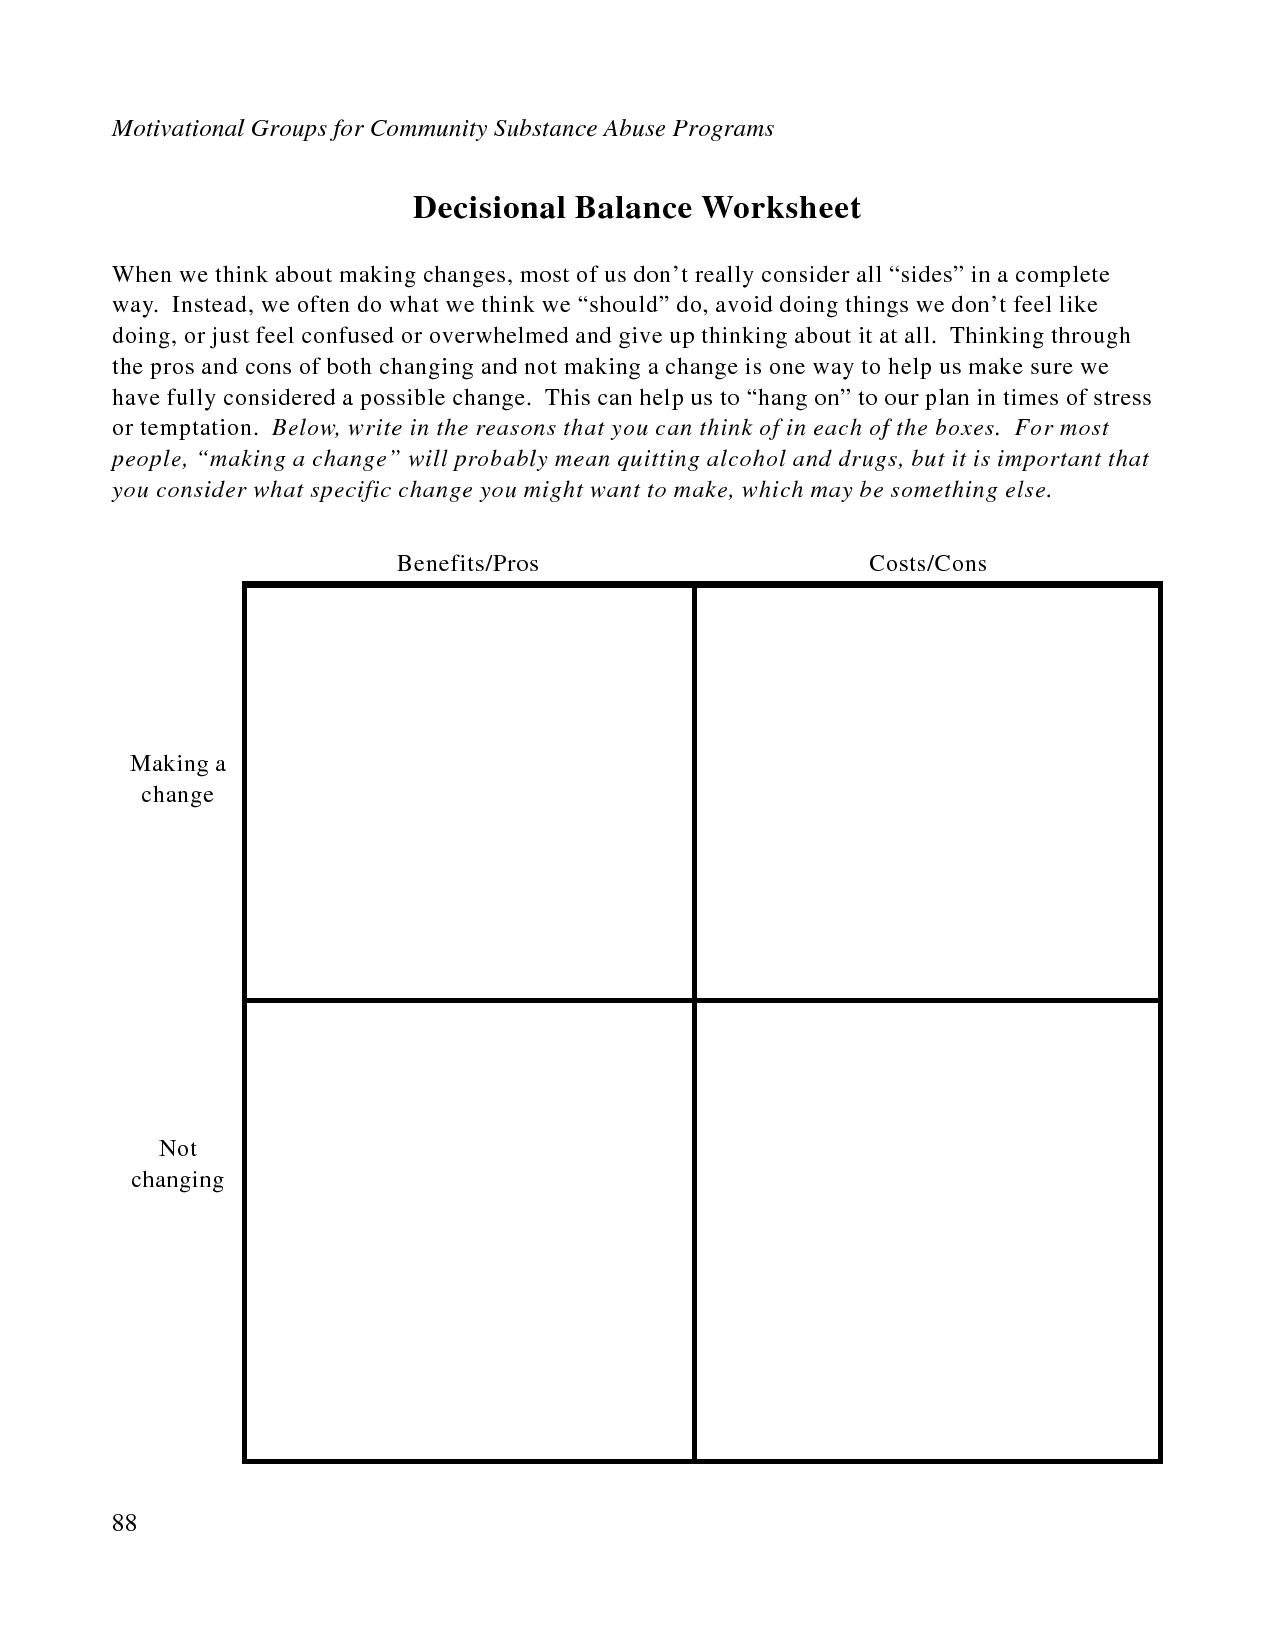 Free Printable Dbt Worksheets | Decisional Balance Worksheet - Pdf - Free Printable Making Change Worksheets